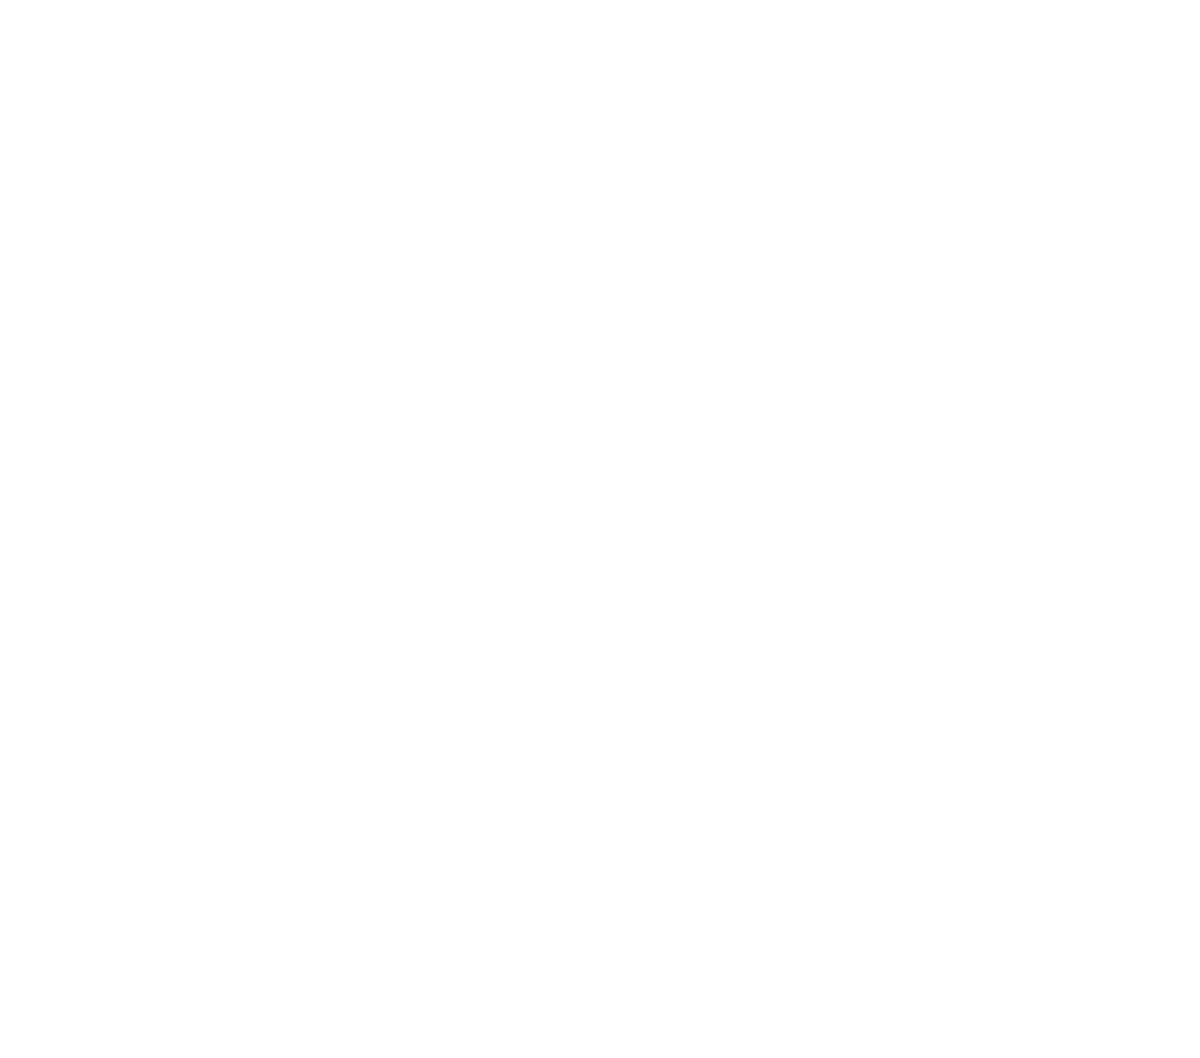 HUB Financial expert alpha tight borders@2x